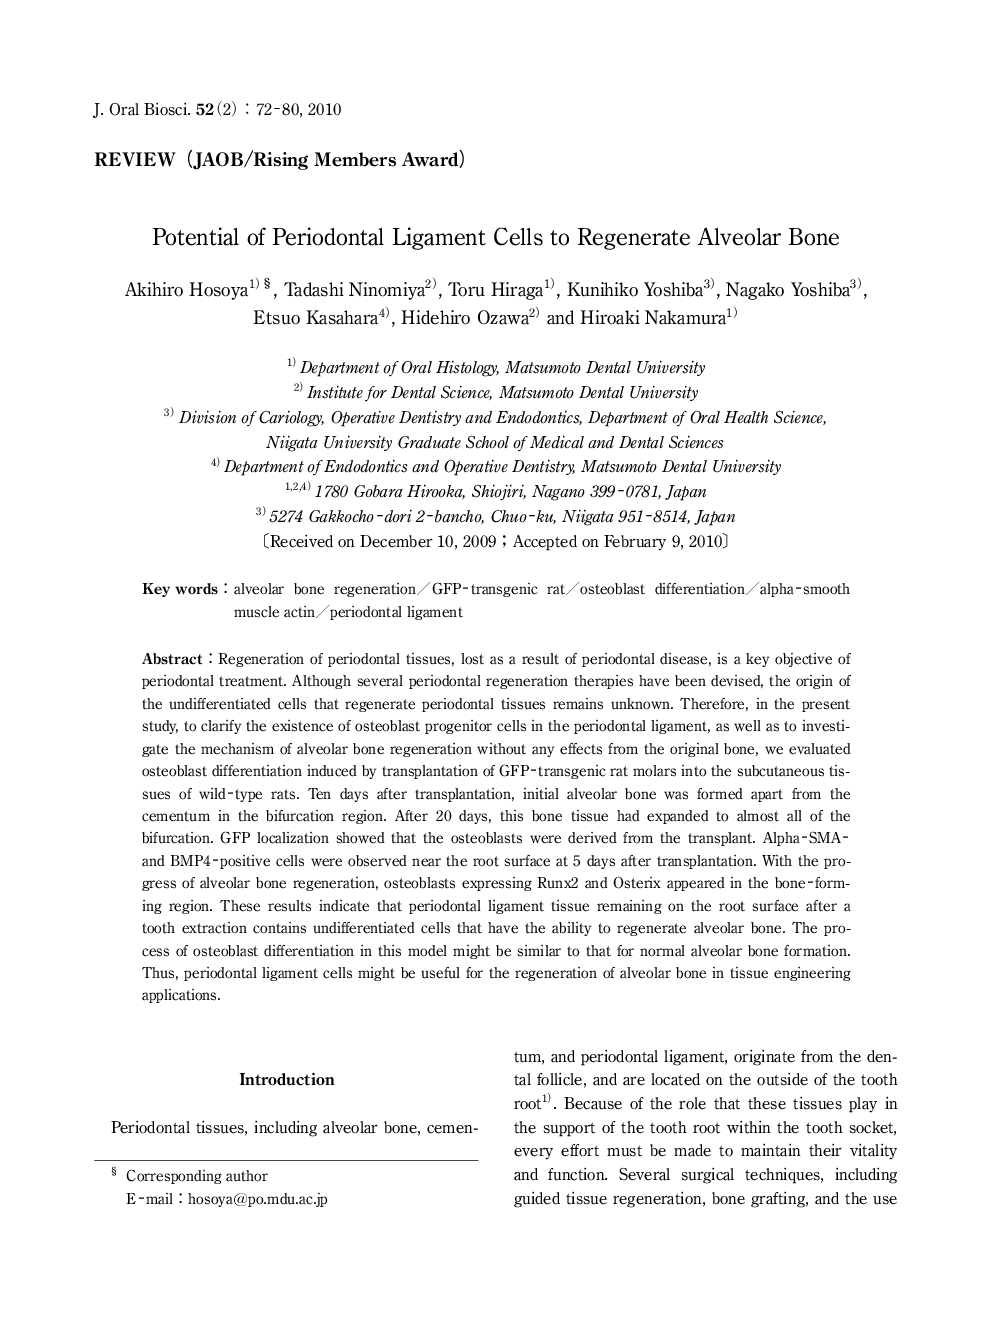 Potential of Periodontal Ligament Cells to Regenerate Alveolar Bone